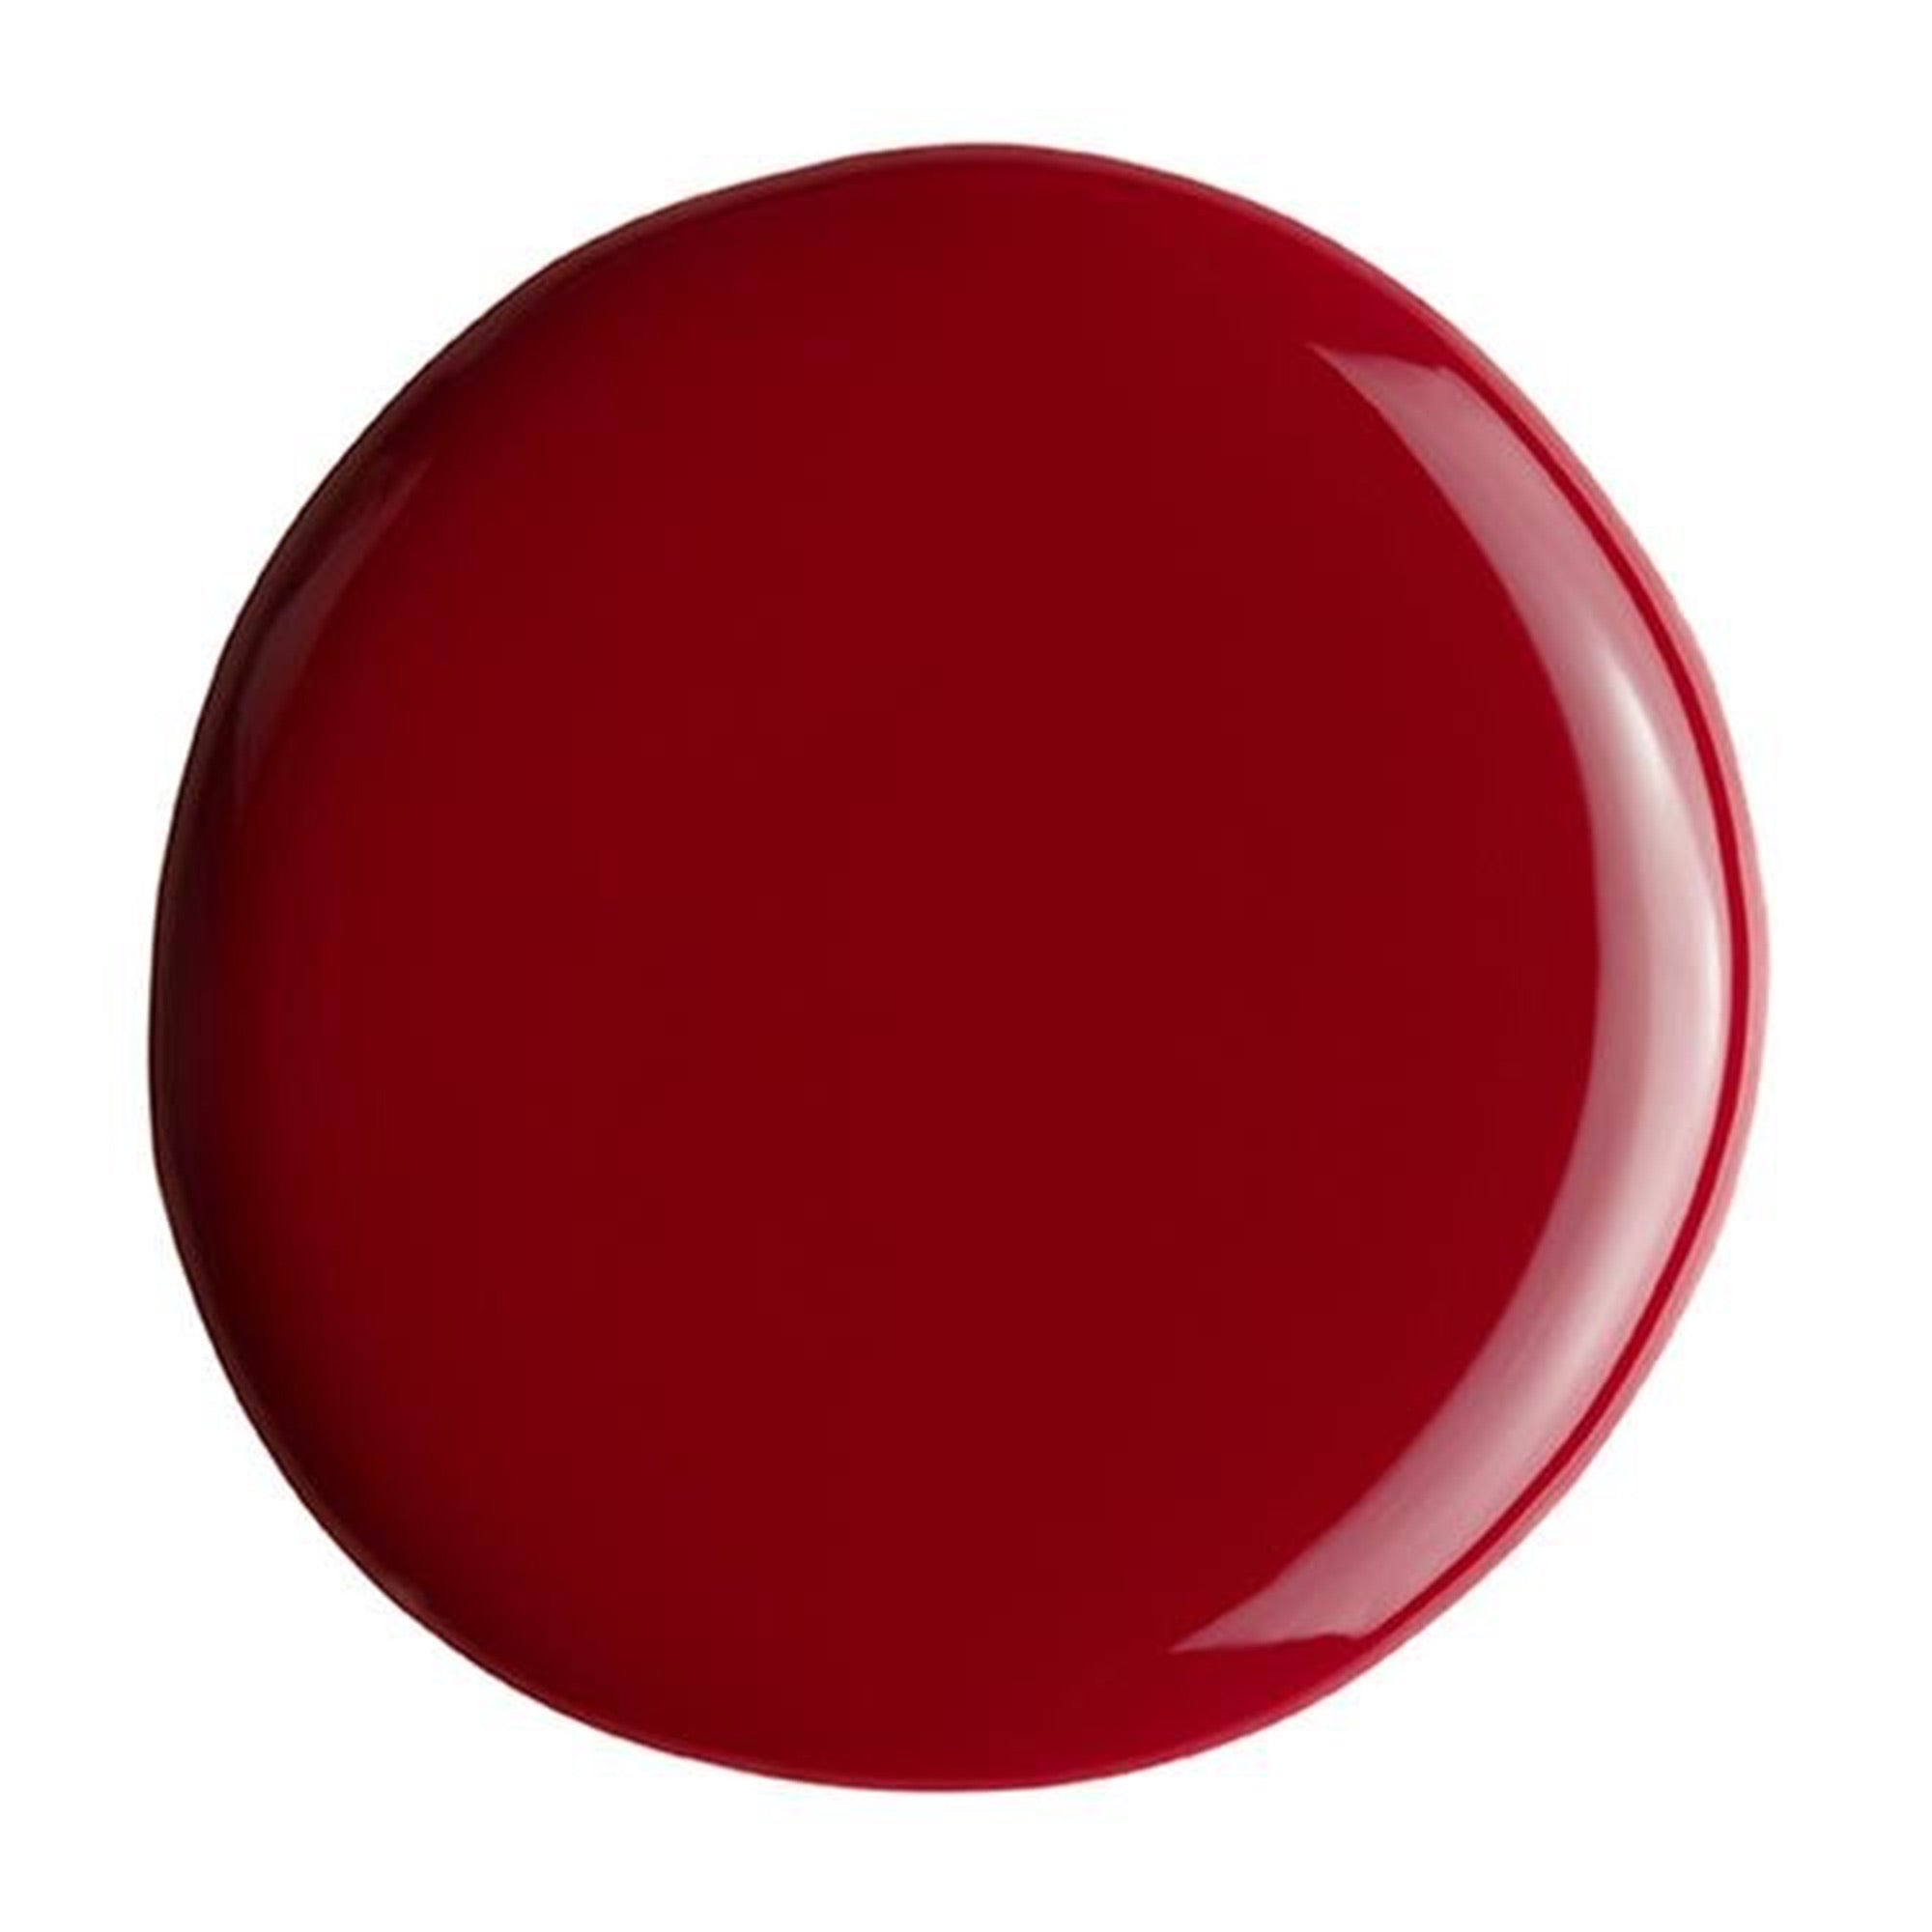 Alix Avien - Nail Polish No.16 (Cherry Red)